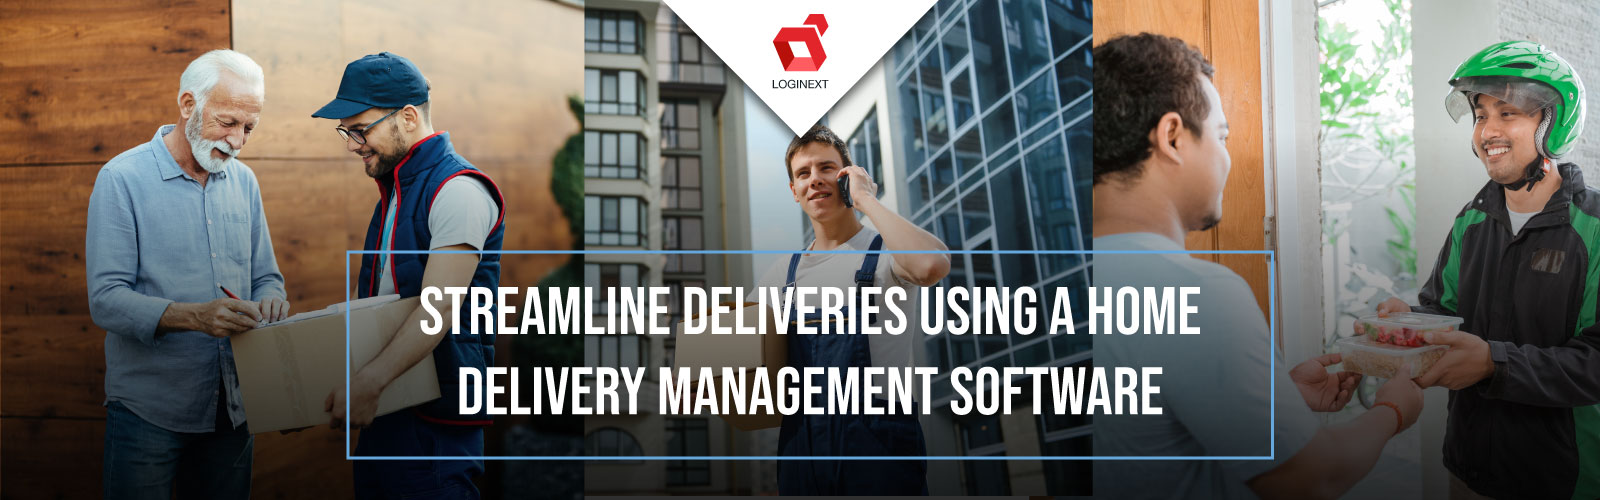 Streamline deliveries using home delivery management software